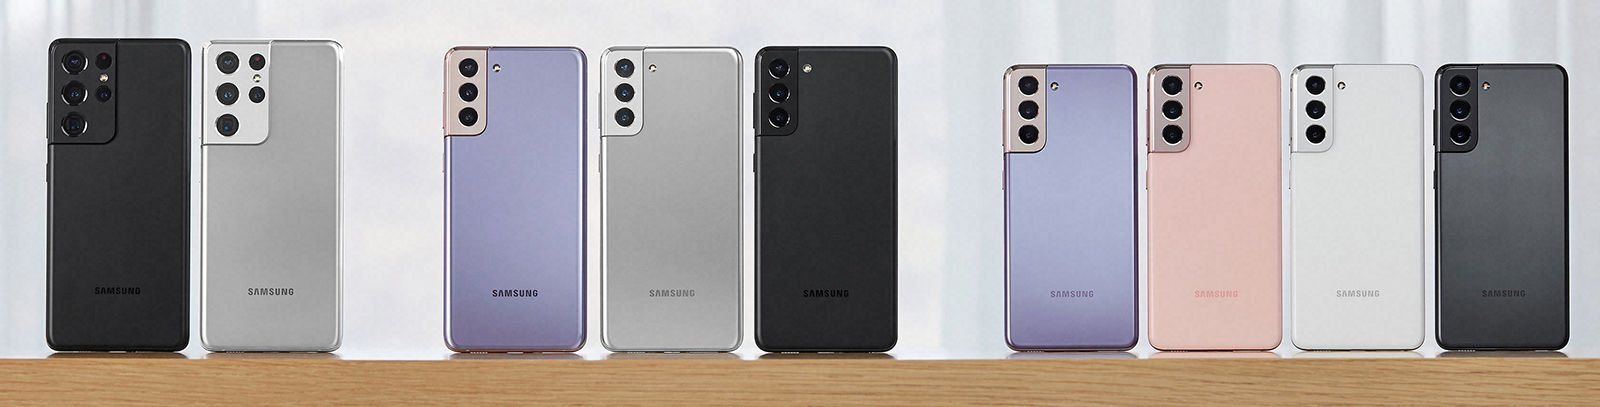 Samsung S21 range